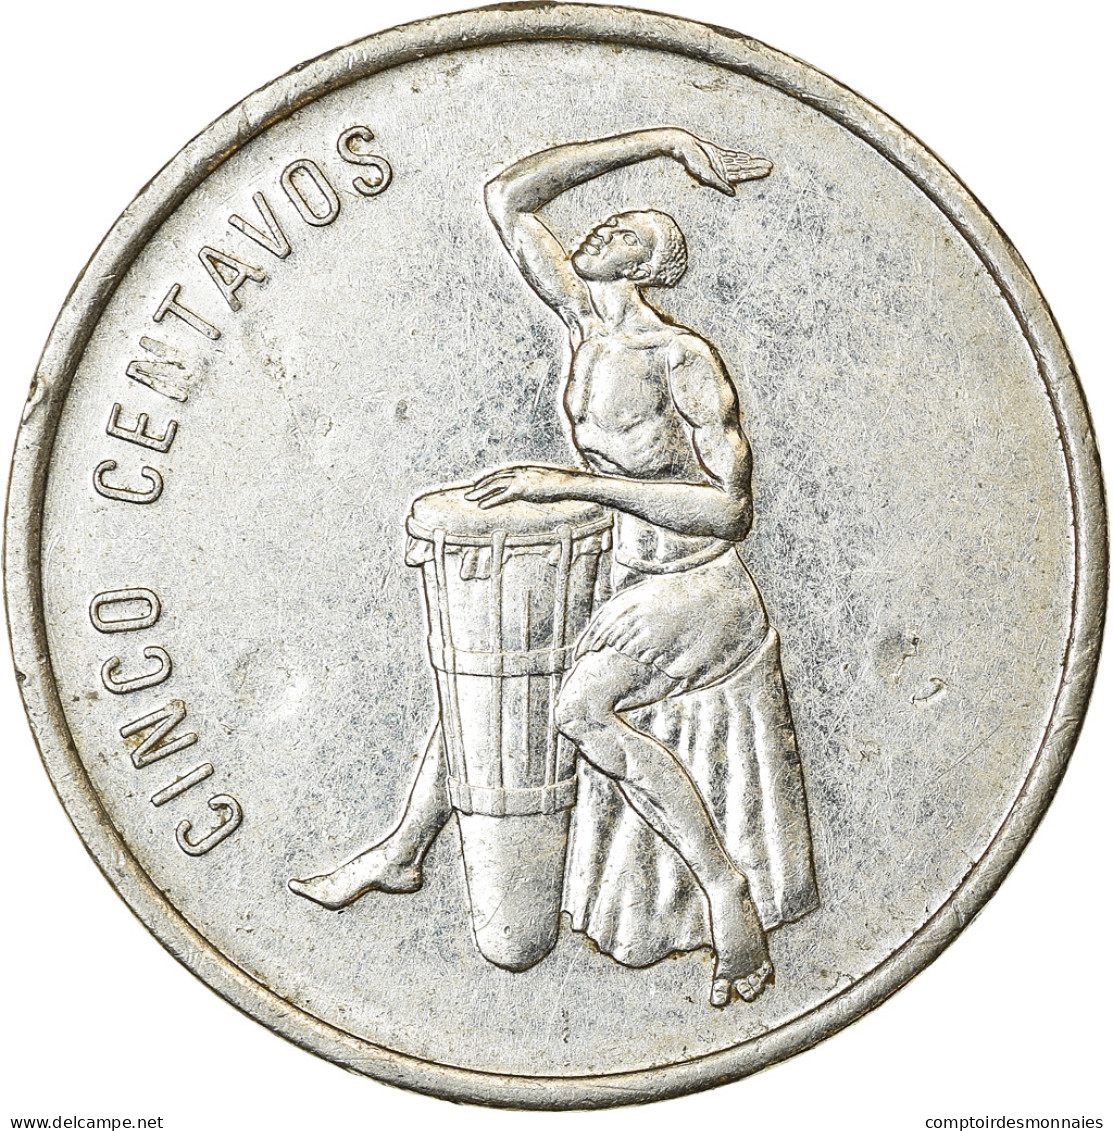 Monnaie, Dominican Republic, 5 Centavos, 1989, TTB, Nickel Clad Steel, KM:69 - Dominicana